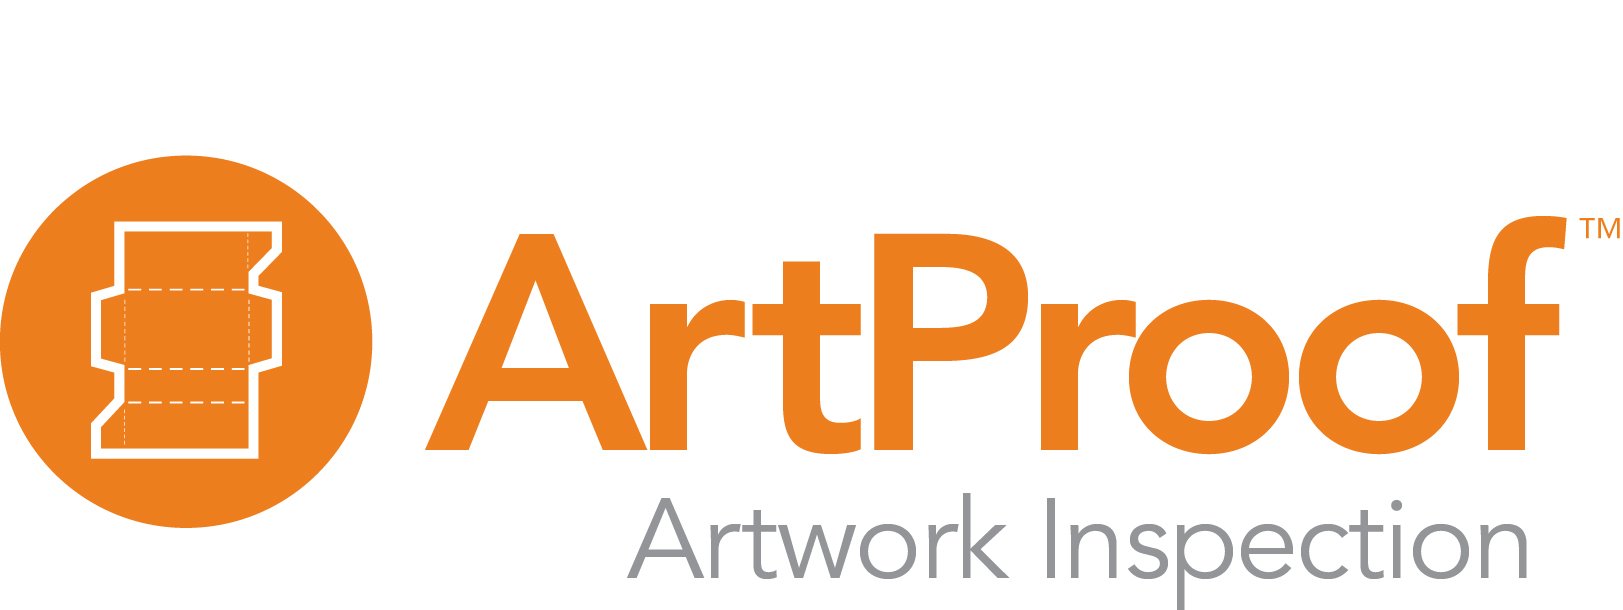 ArtProof - Artwork Inspection Solution